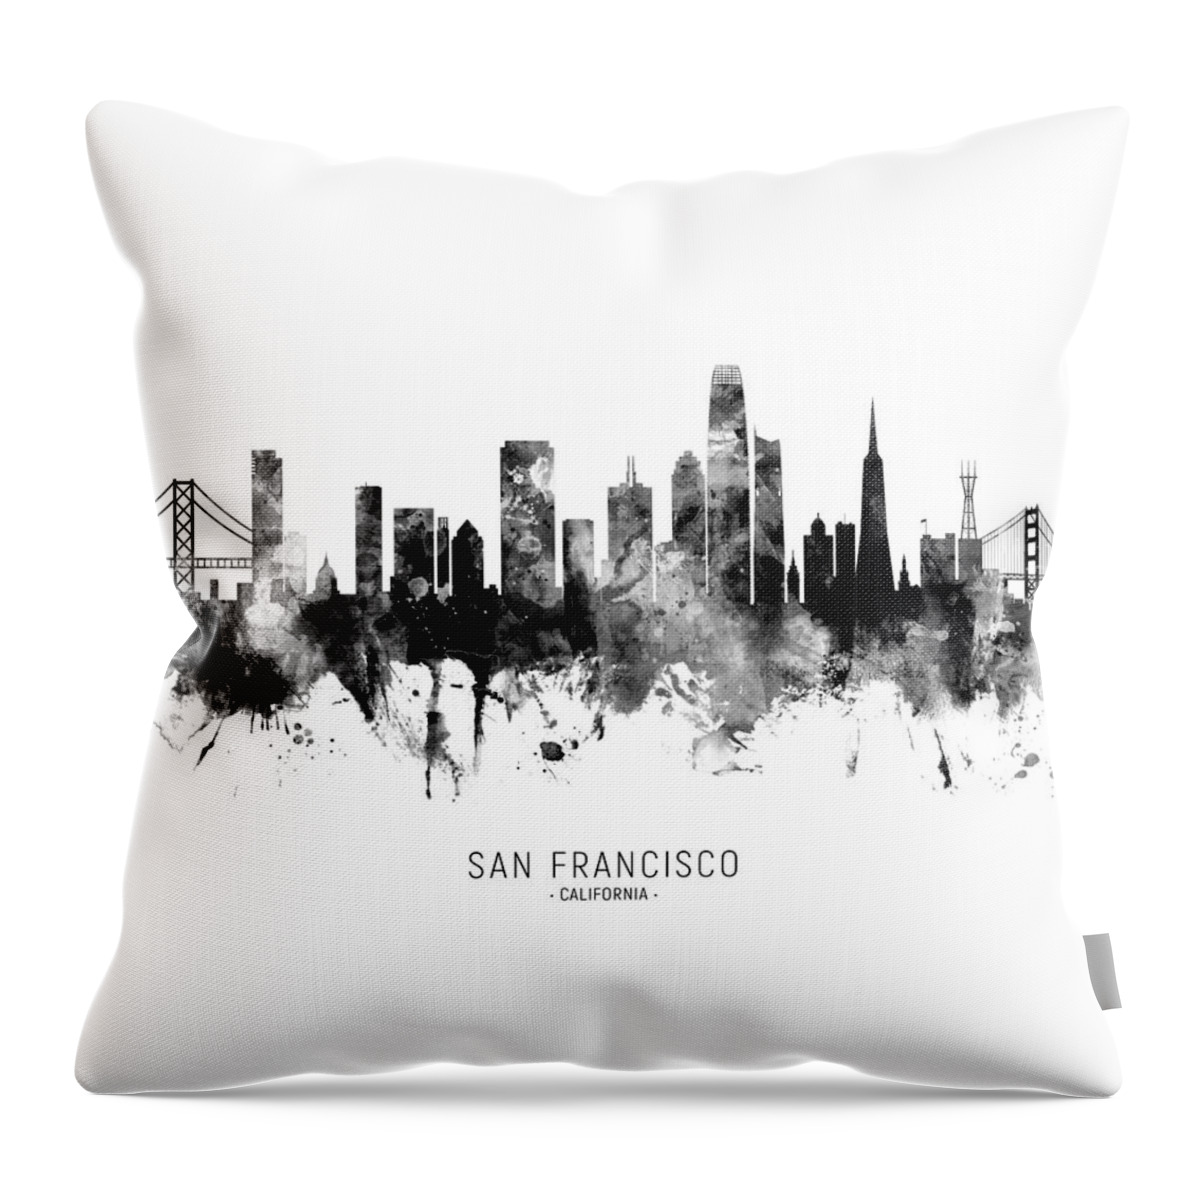 San Francisco Throw Pillow featuring the digital art San Francisco California Skyline #6 by Michael Tompsett